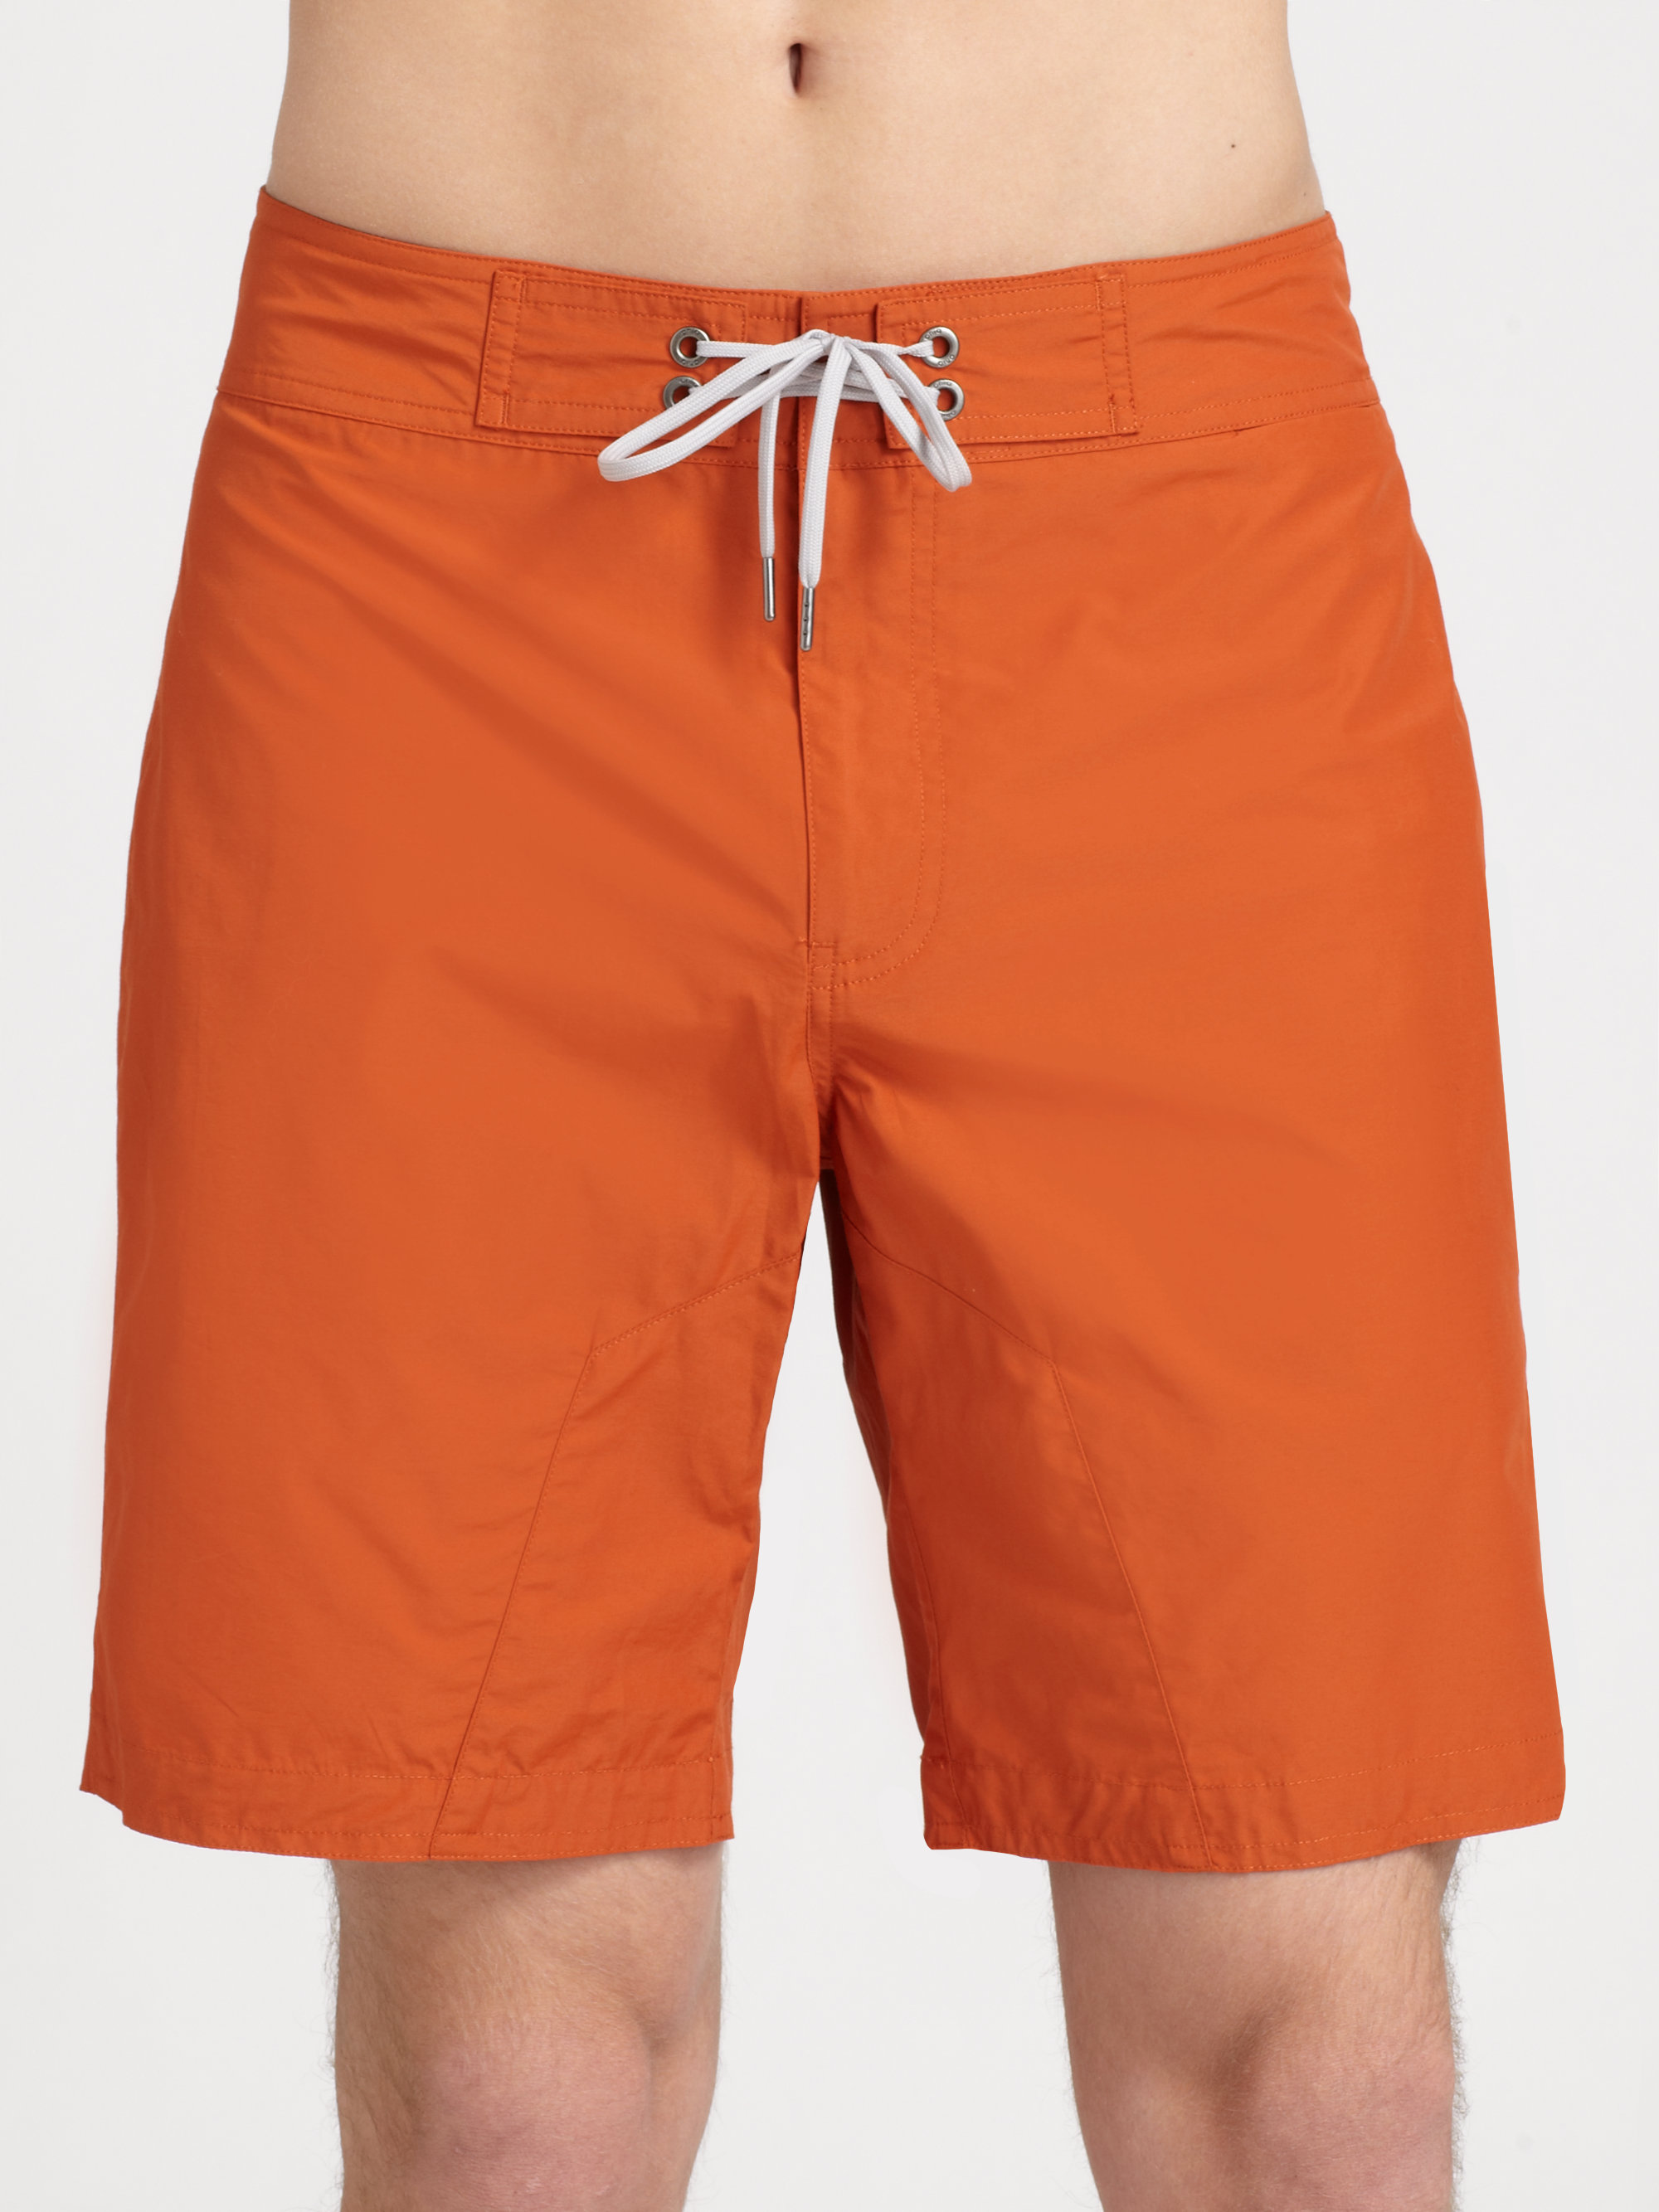 Onia Board Shorts in Burnt Orange (Orange) for Men - Lyst